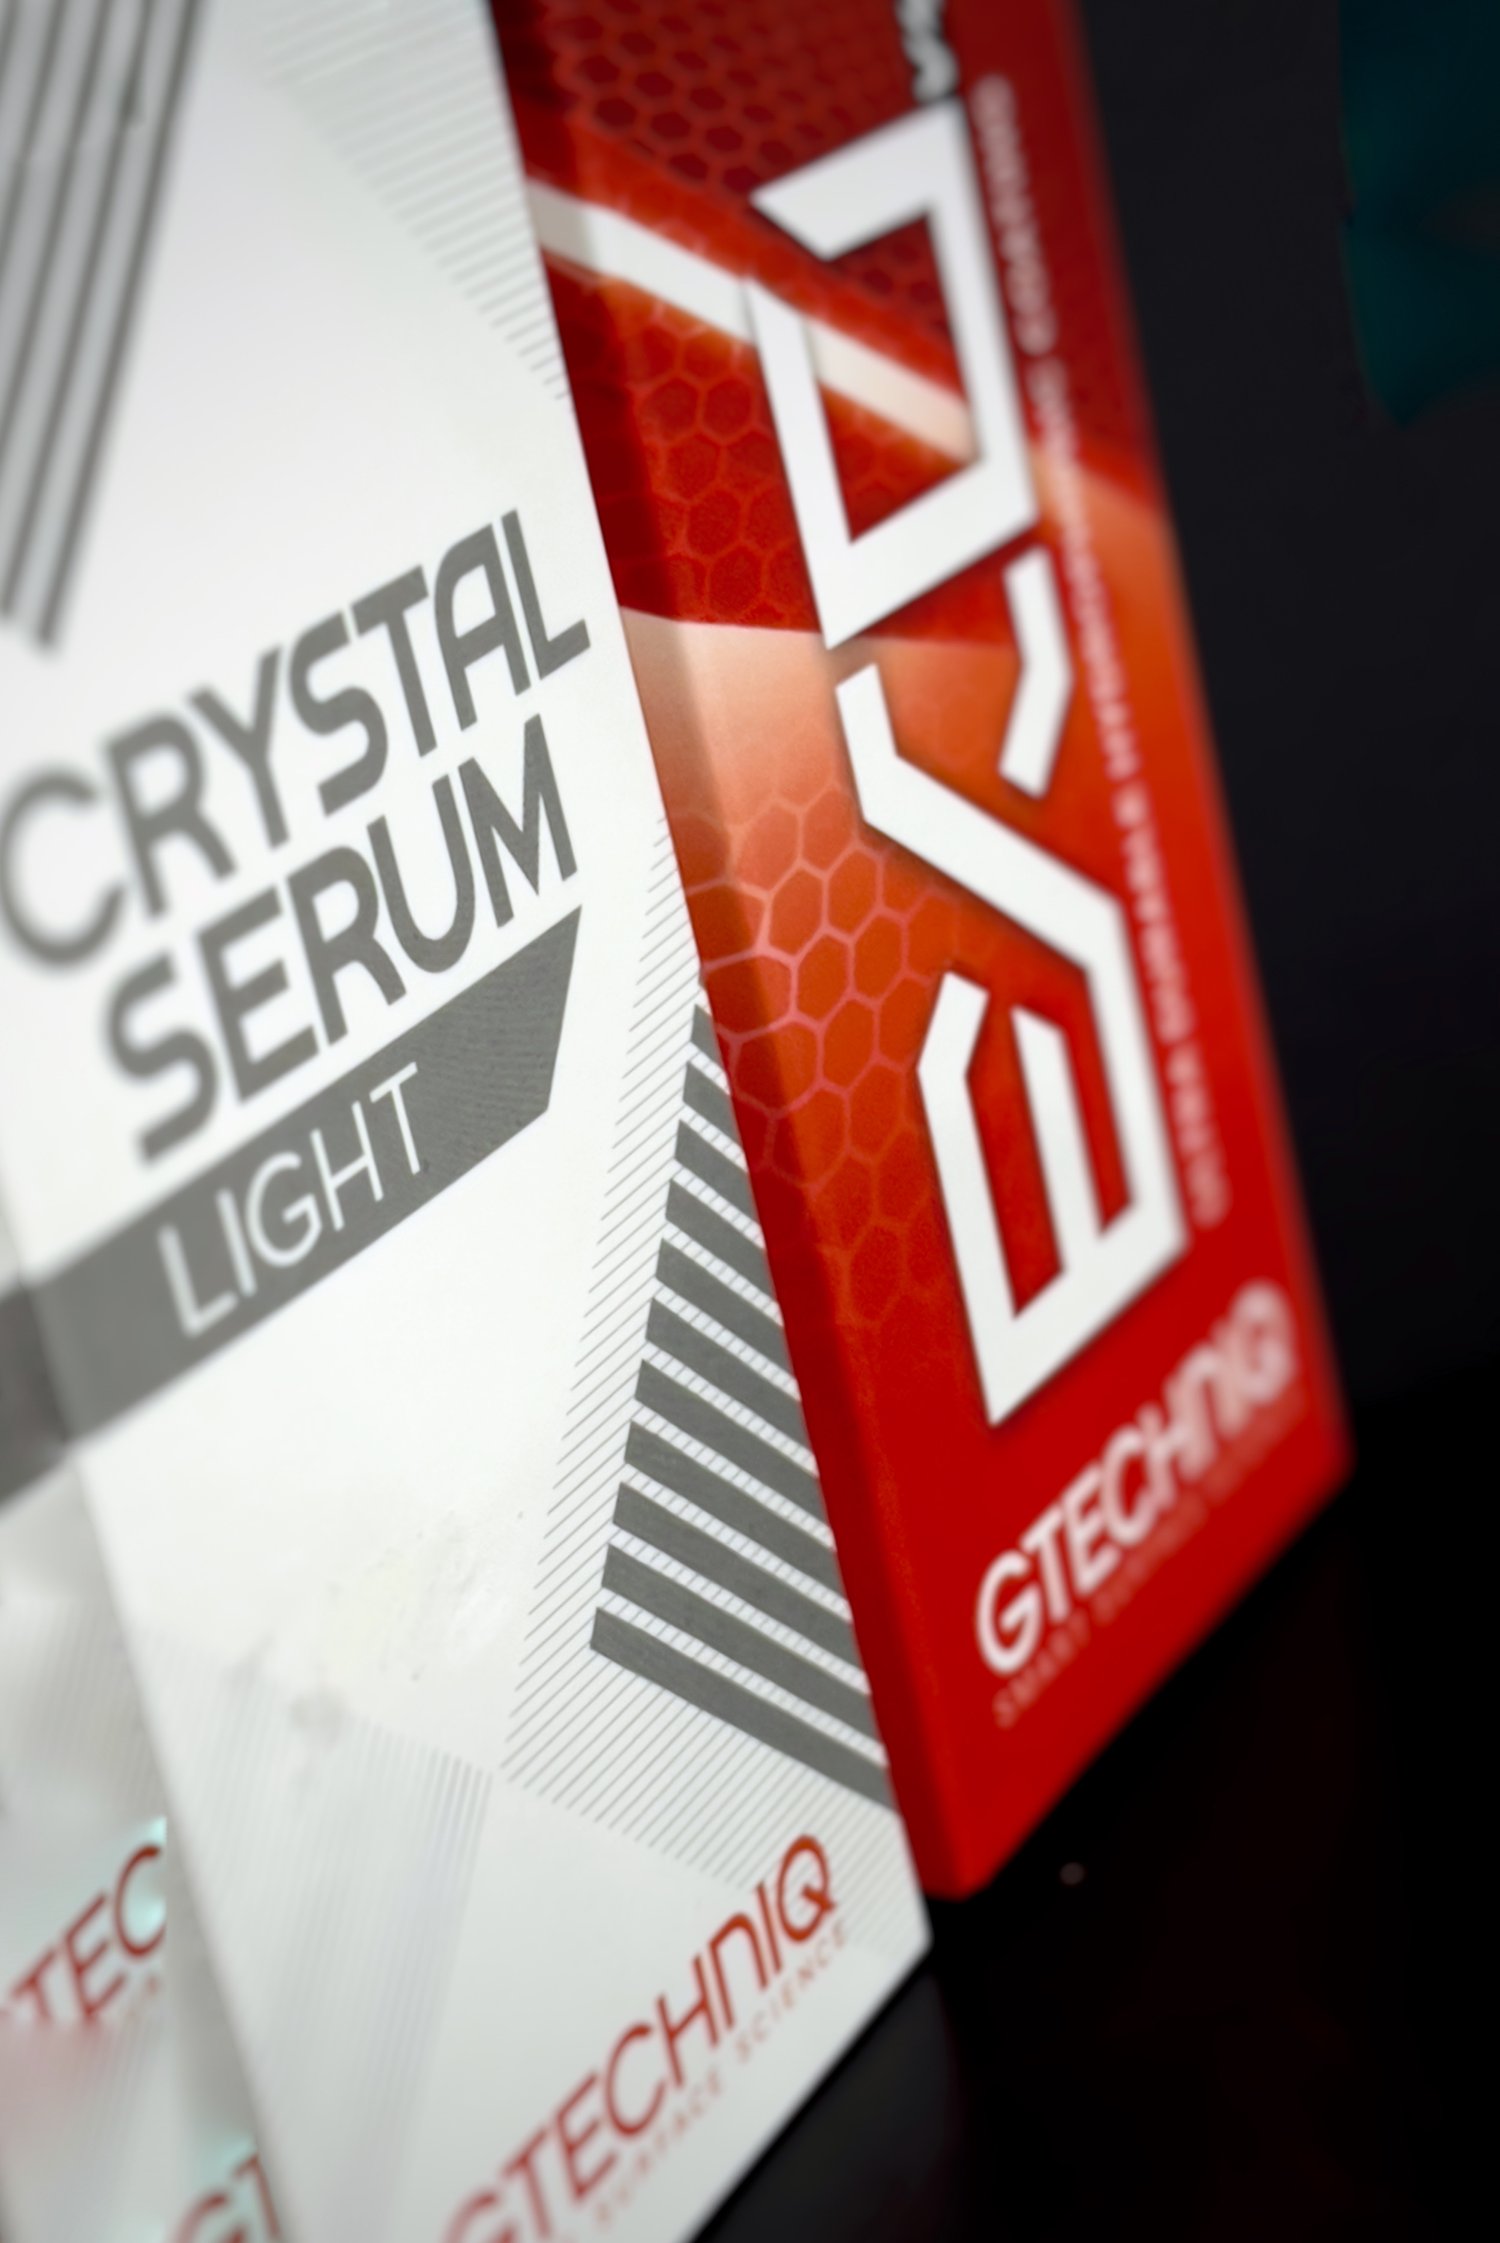 EXO and Crystal Serum Light